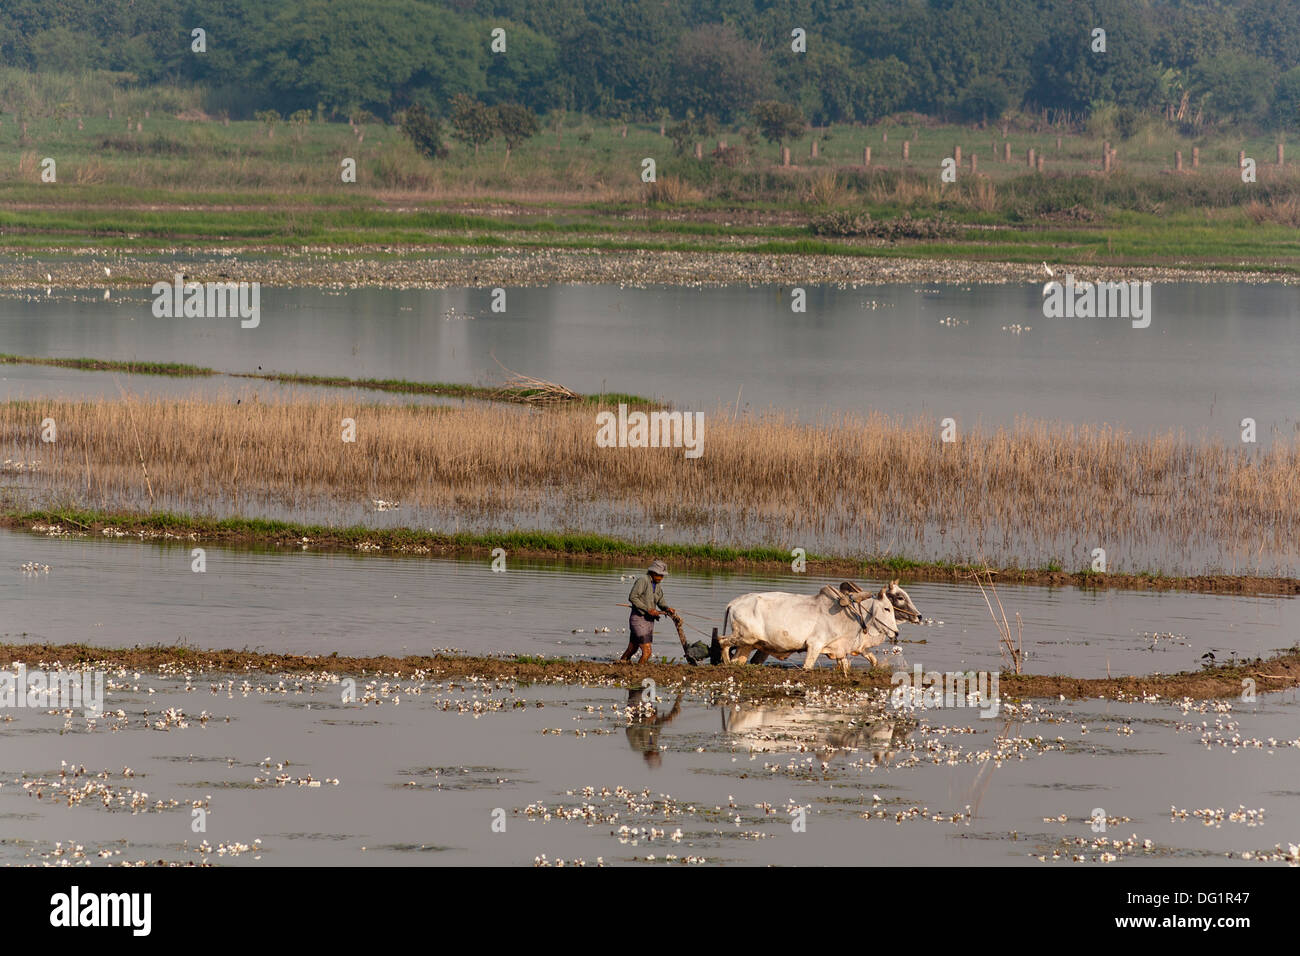 Farmer and oxen ploughing paddy fields, near Mandalay, Myanmar, (Burma) Stock Photo